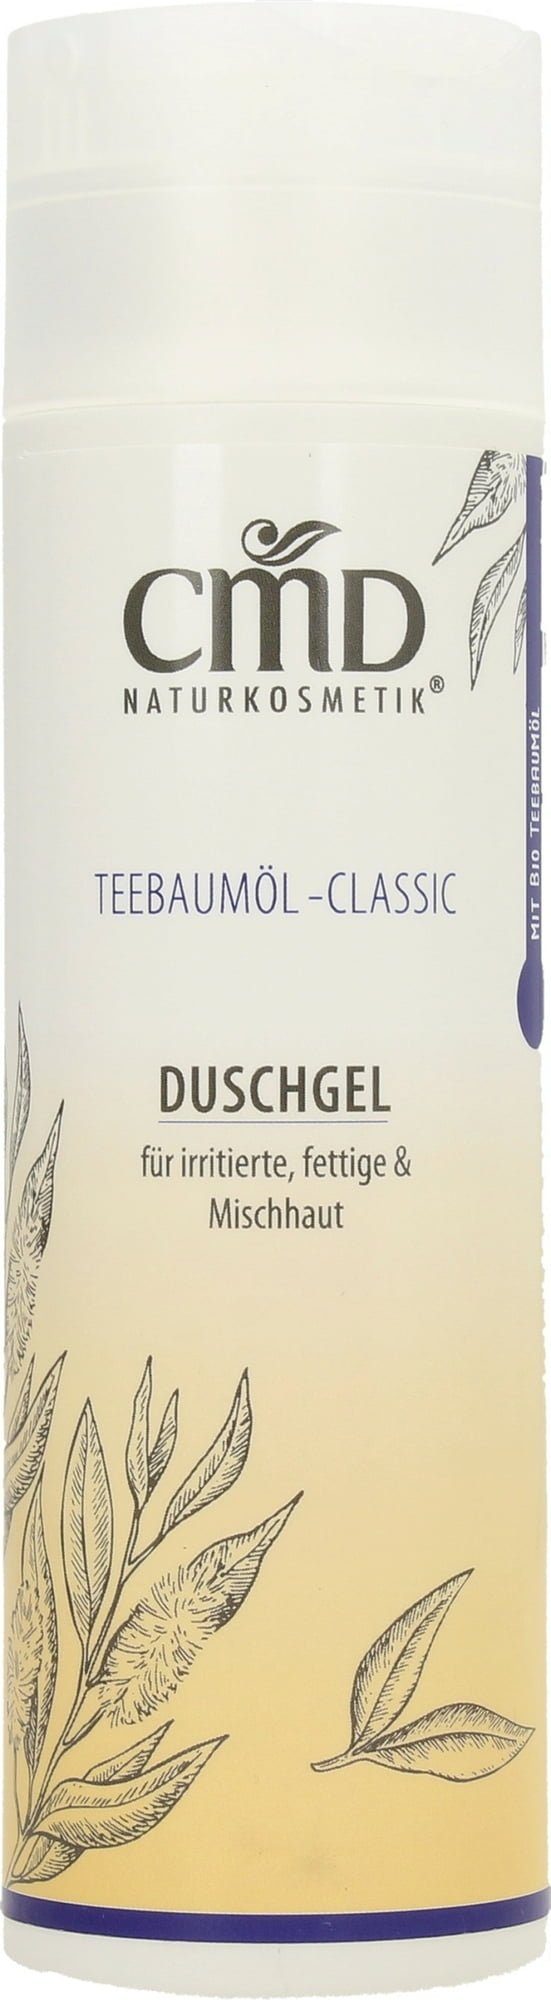 Teebaumöl CMD Duschgel 200ml Naturkosmetik Duschgel